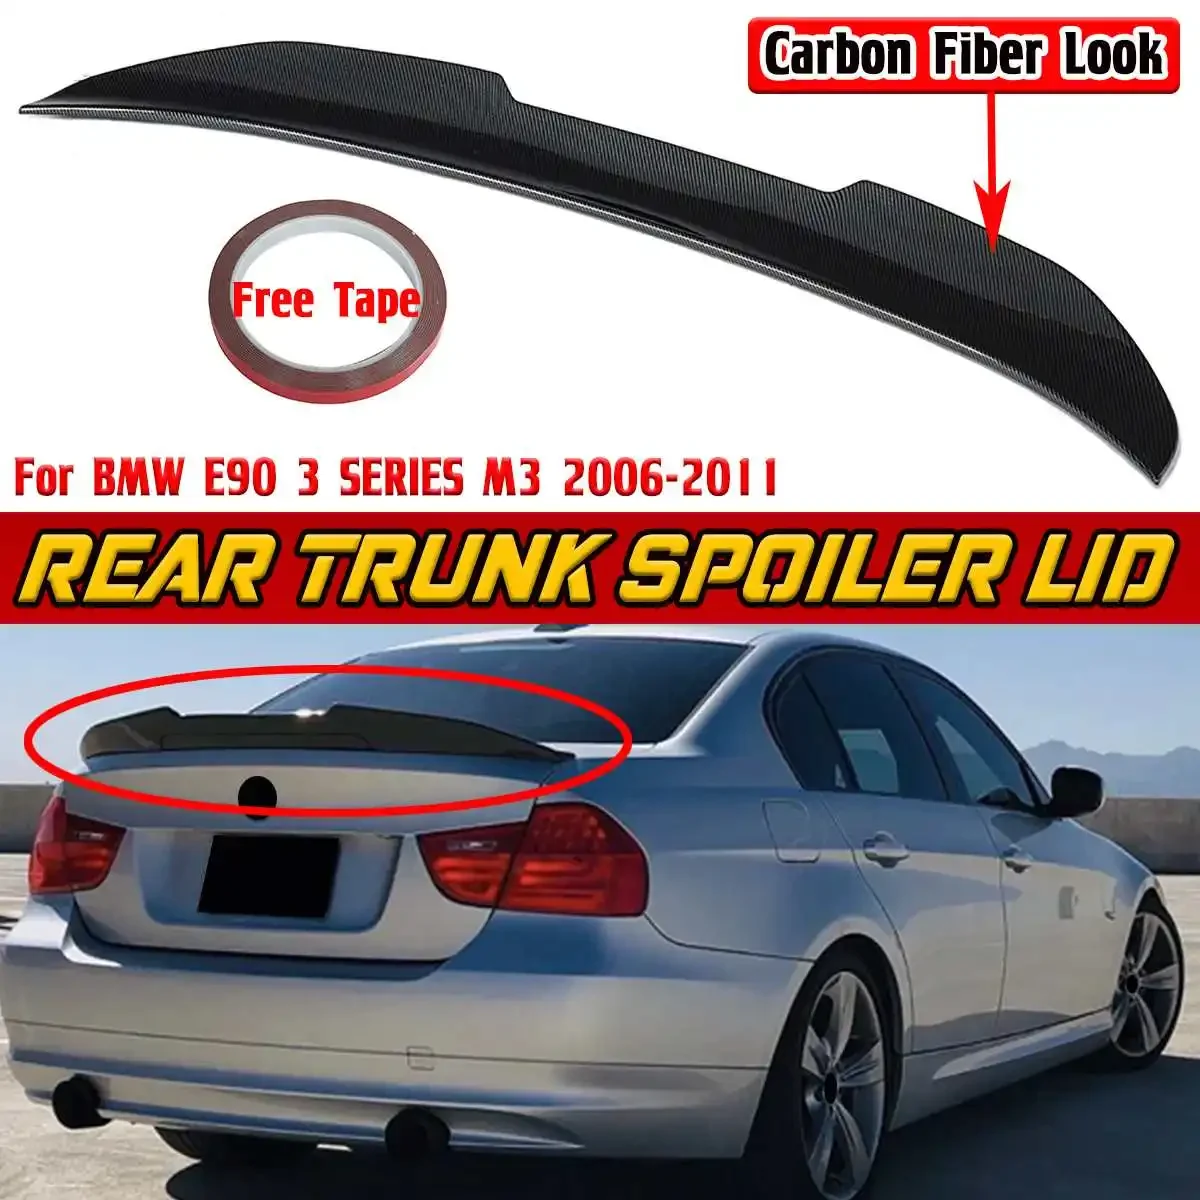 

Black/Carbon Fiber Look E90 Car Rear Trunk Lip Spoiler PSM Style Rear Wing Spoiler For BMW E90 3 SERIES M3 2006-2011 Body Kit